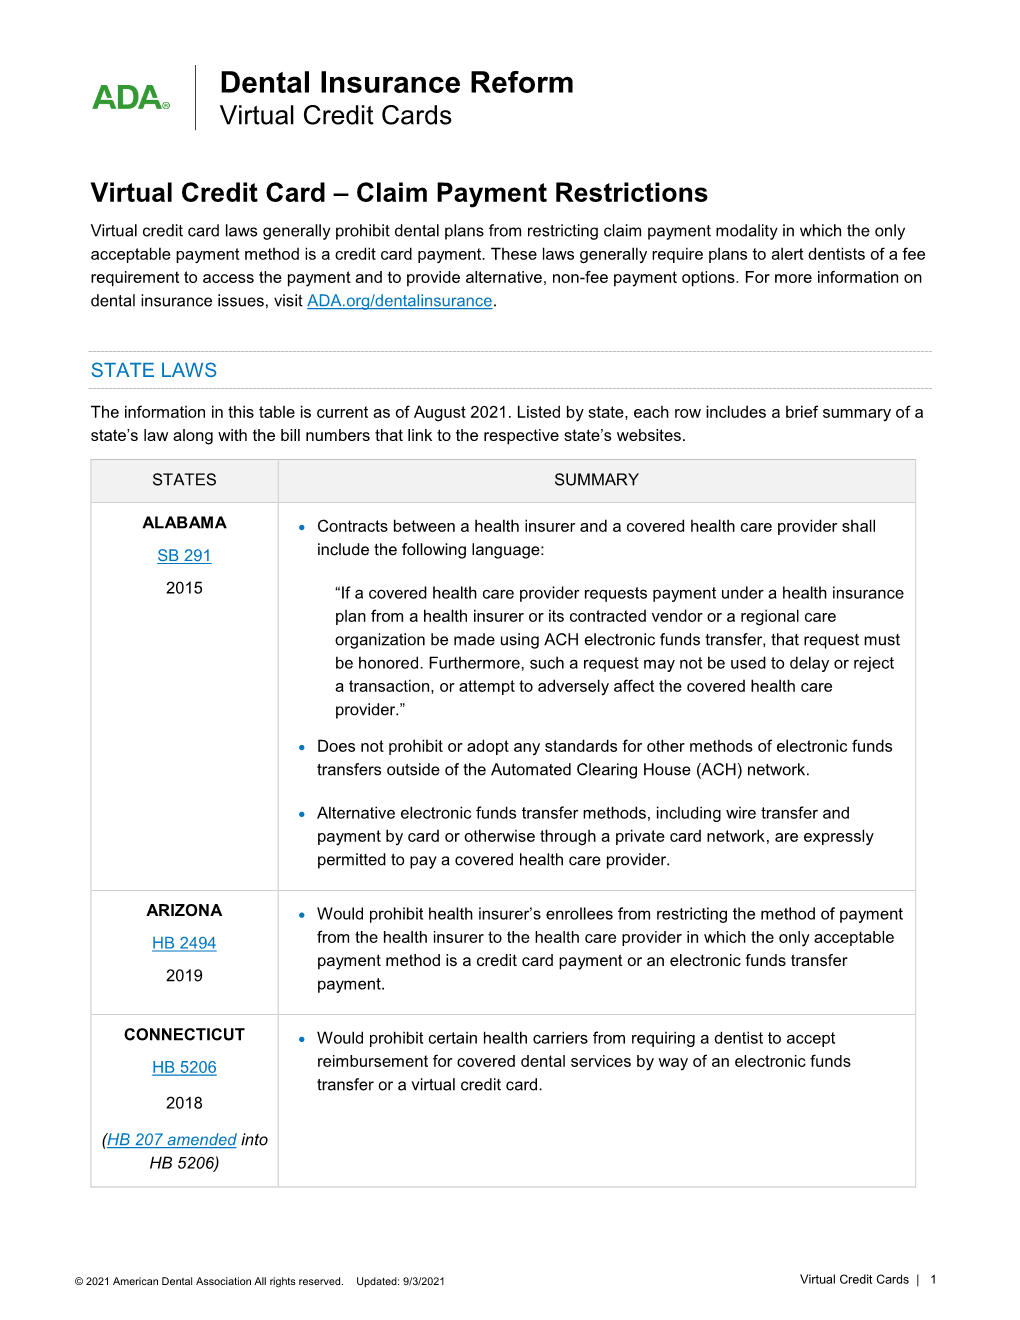 ADA Dental Insurance Reform Virtual Credit Cards